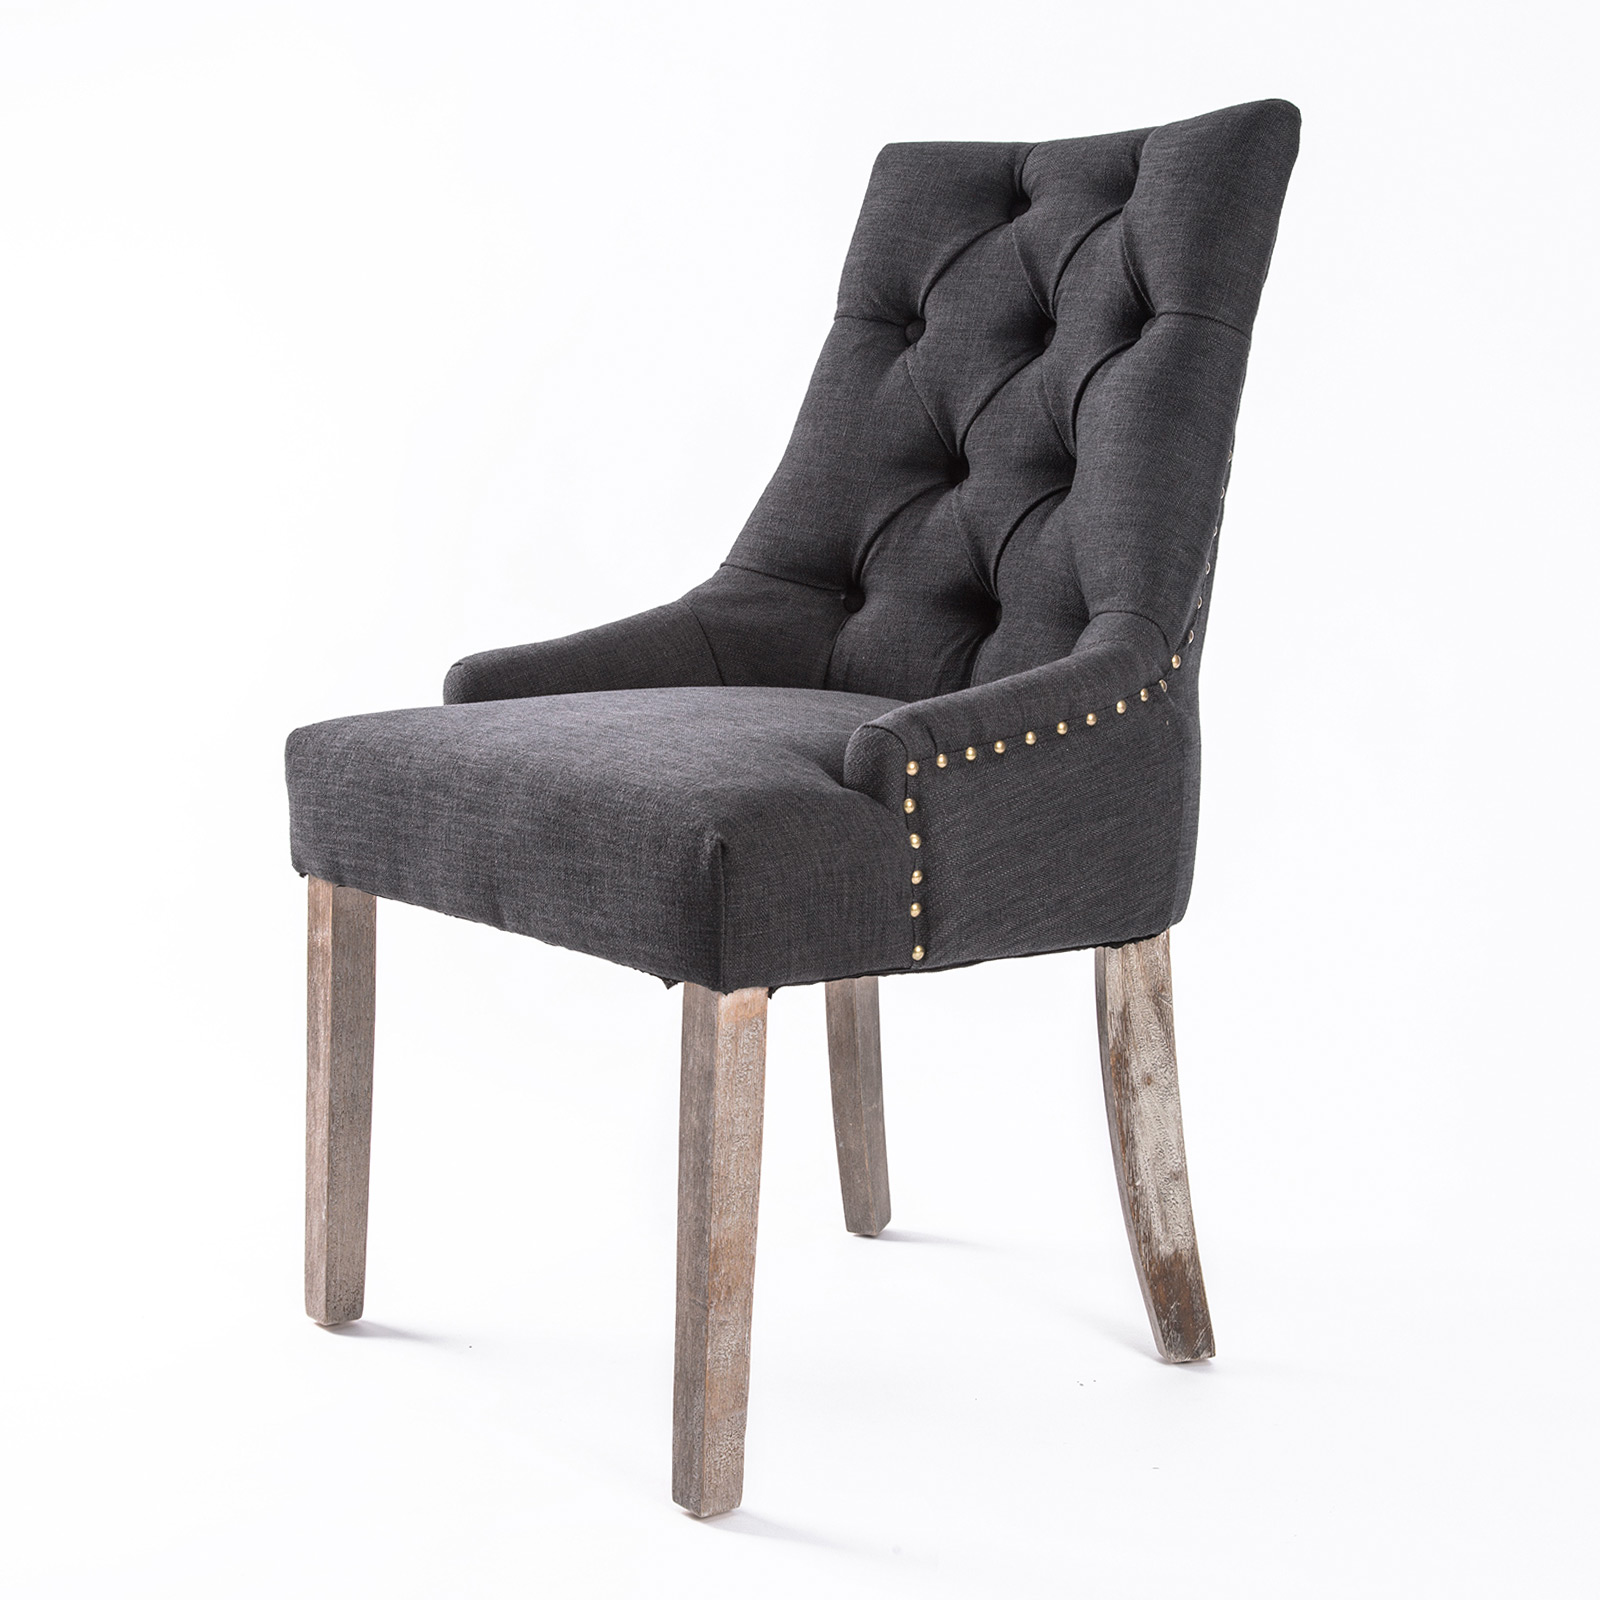 1X French Provincial Oak Leg Chair AMOUR - BLACK (CHARCOAL)